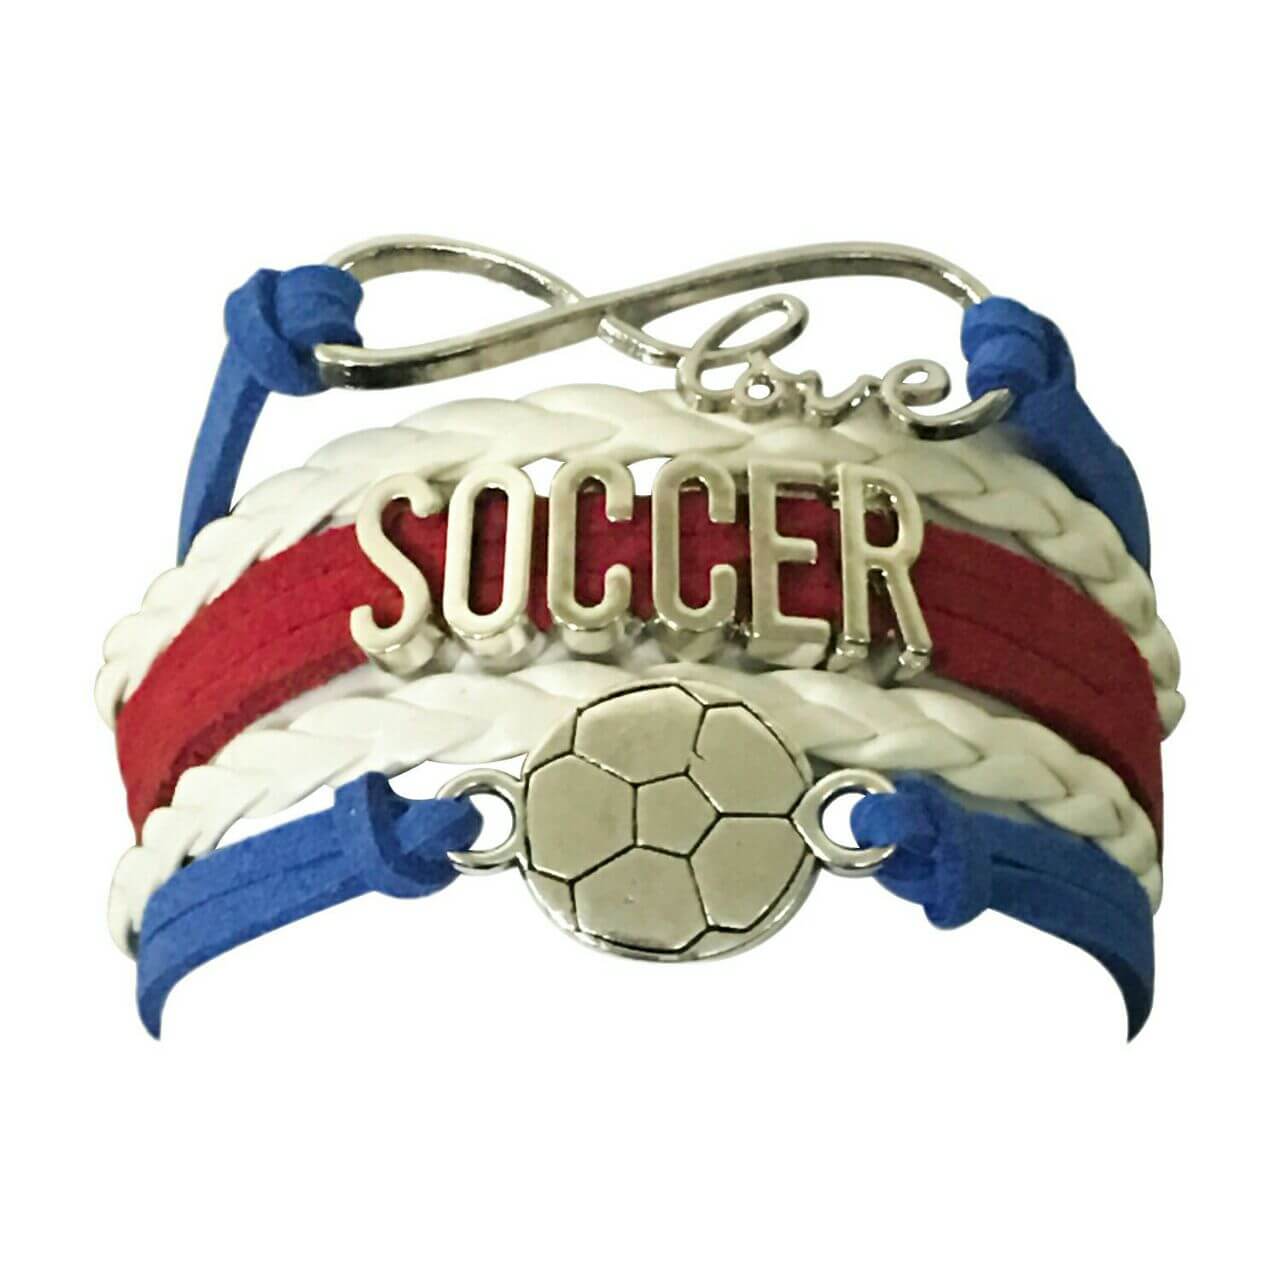 Girls Soccer Bracelet - Blue, White and Red Color